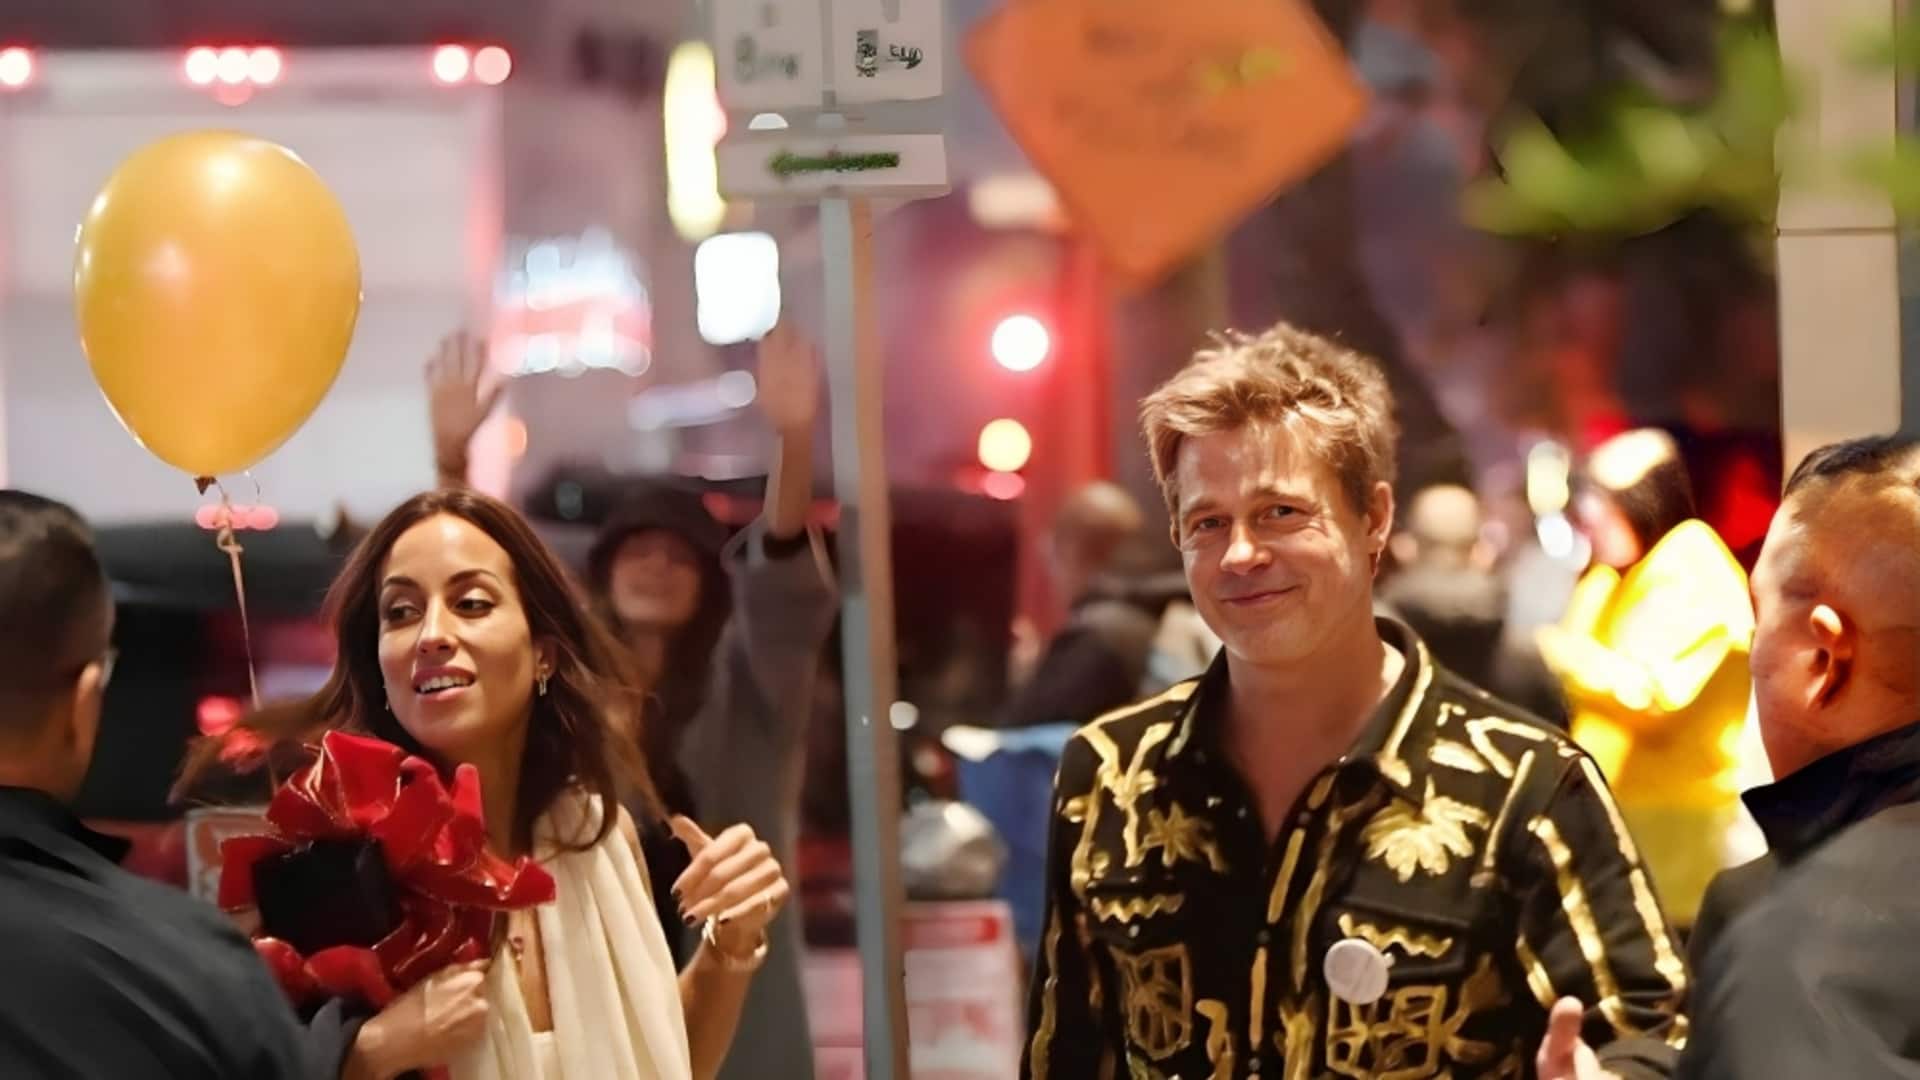 Brad Pitt 'couldn't be happier' with Ines de Ramon: Report